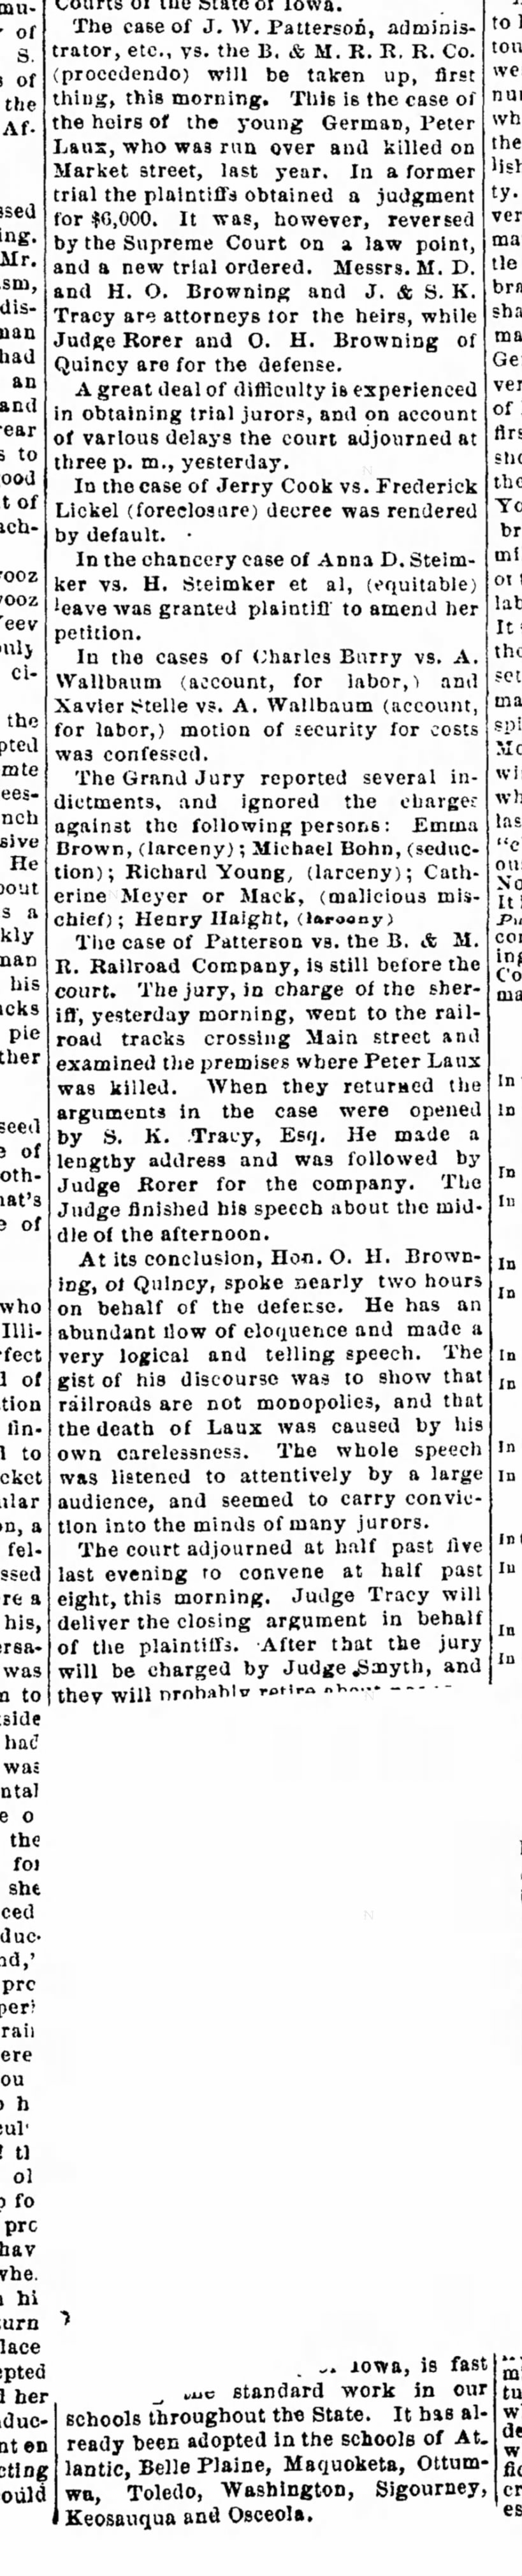 Peter Laux' death on RR tracks in 1873. Court case June 1874